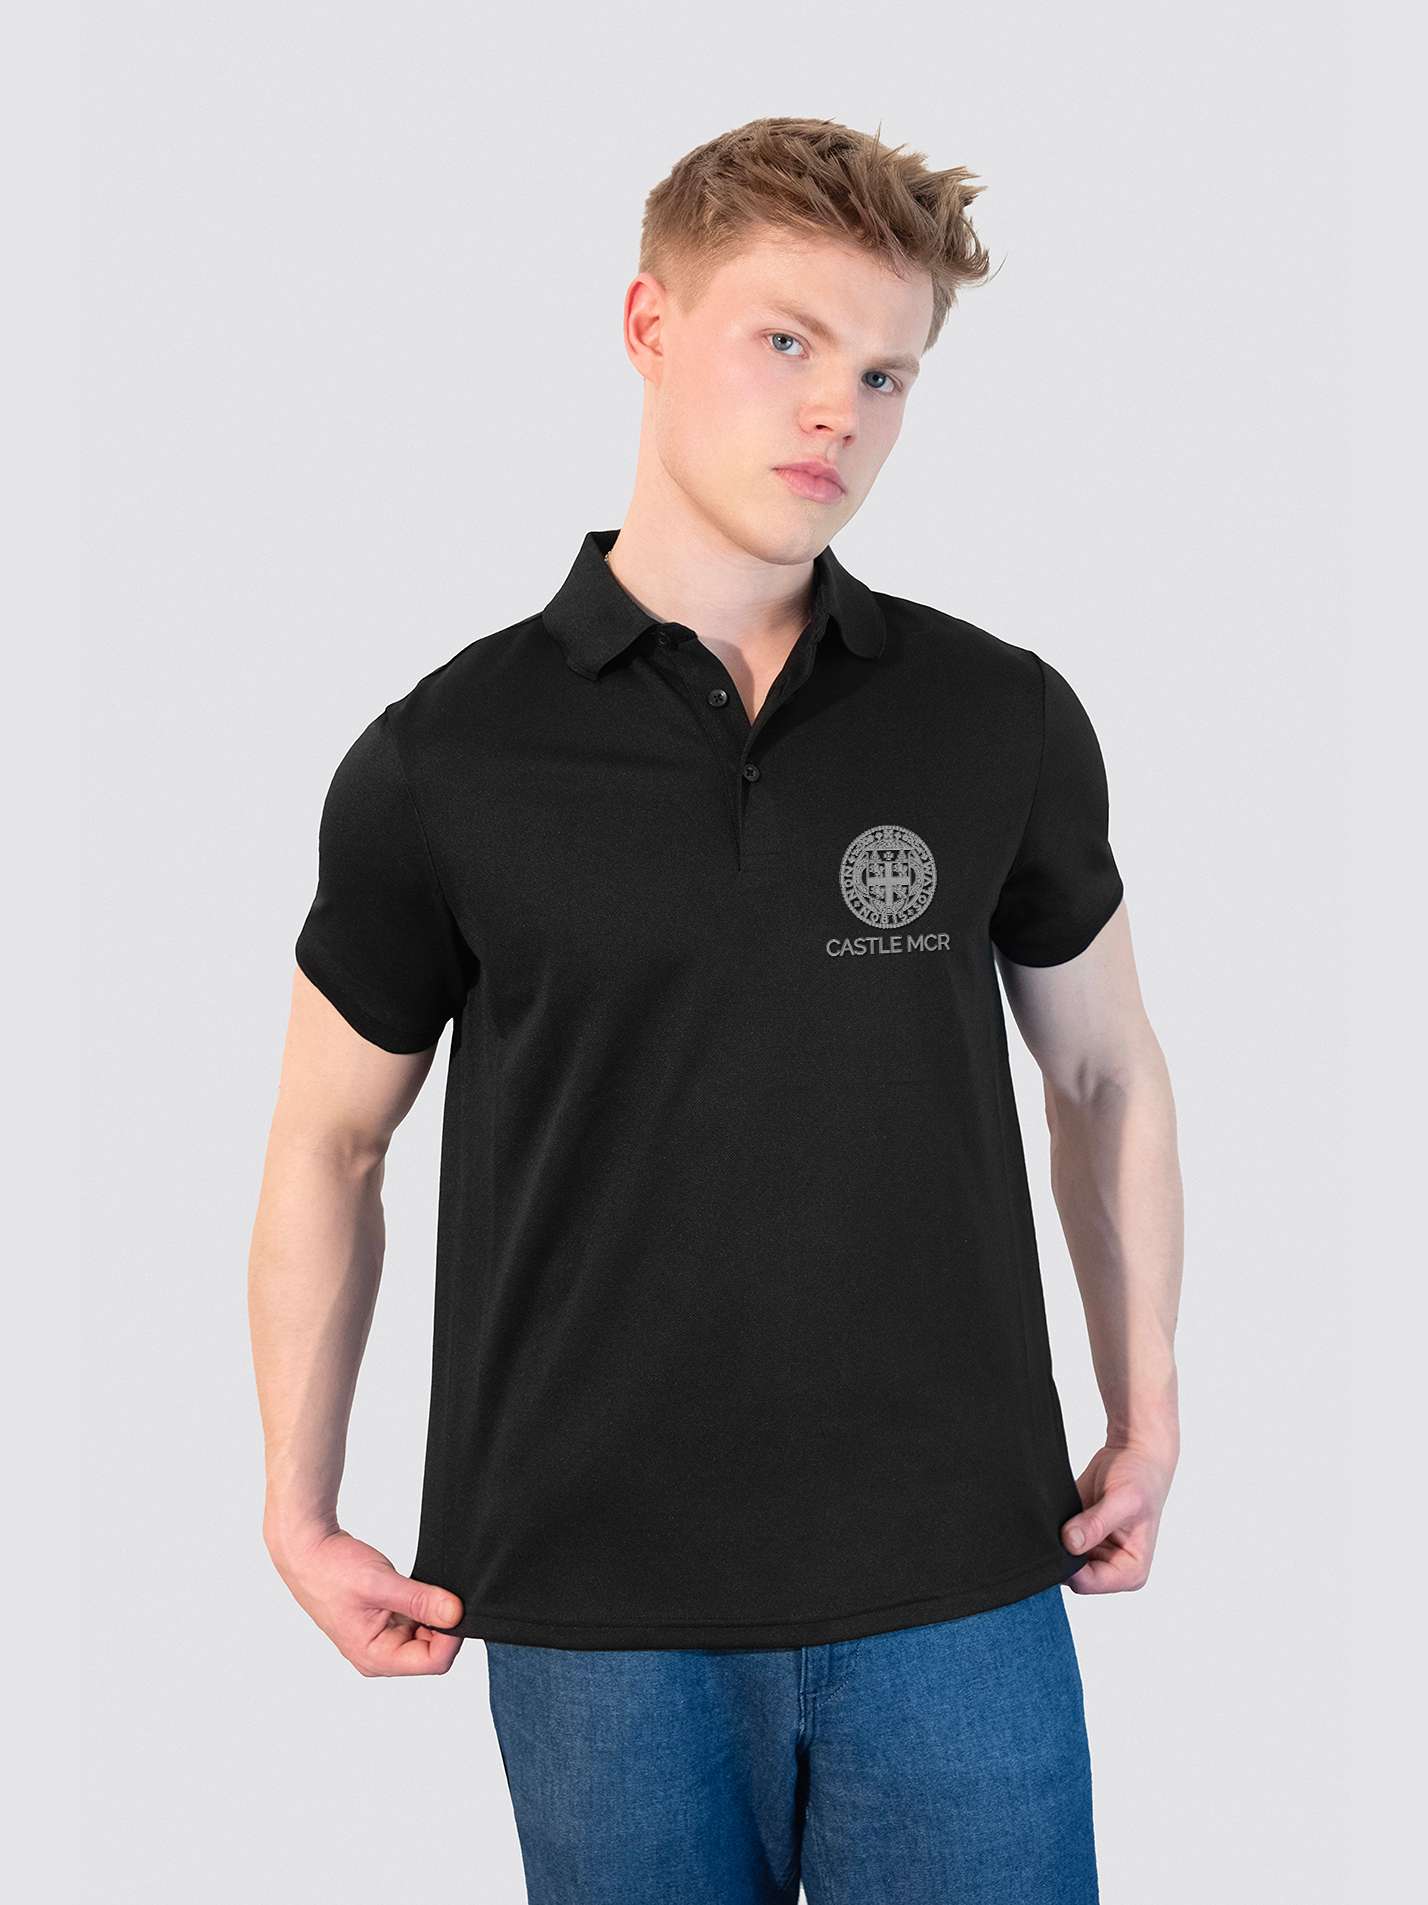 Castle MCR Durham Sustainable Men's Polo Shirt